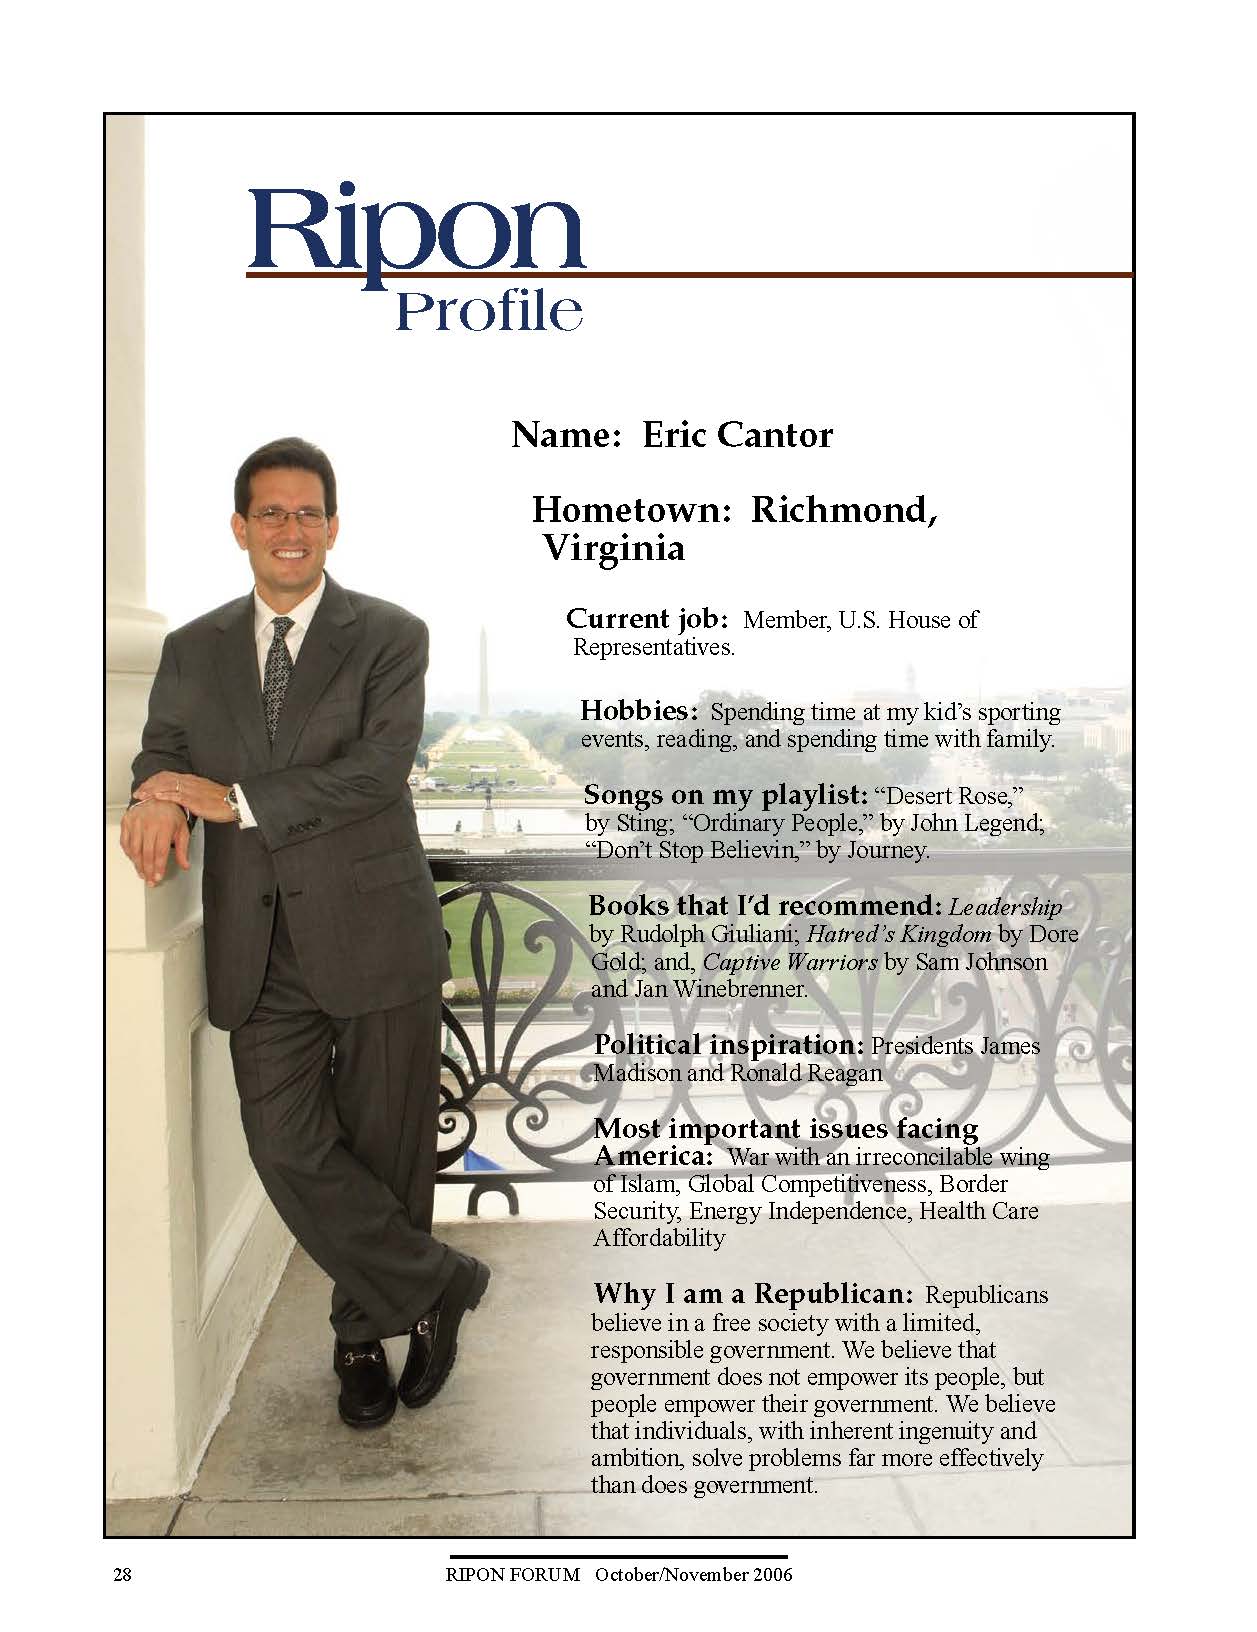 Ripon Profile of Eric Cantor